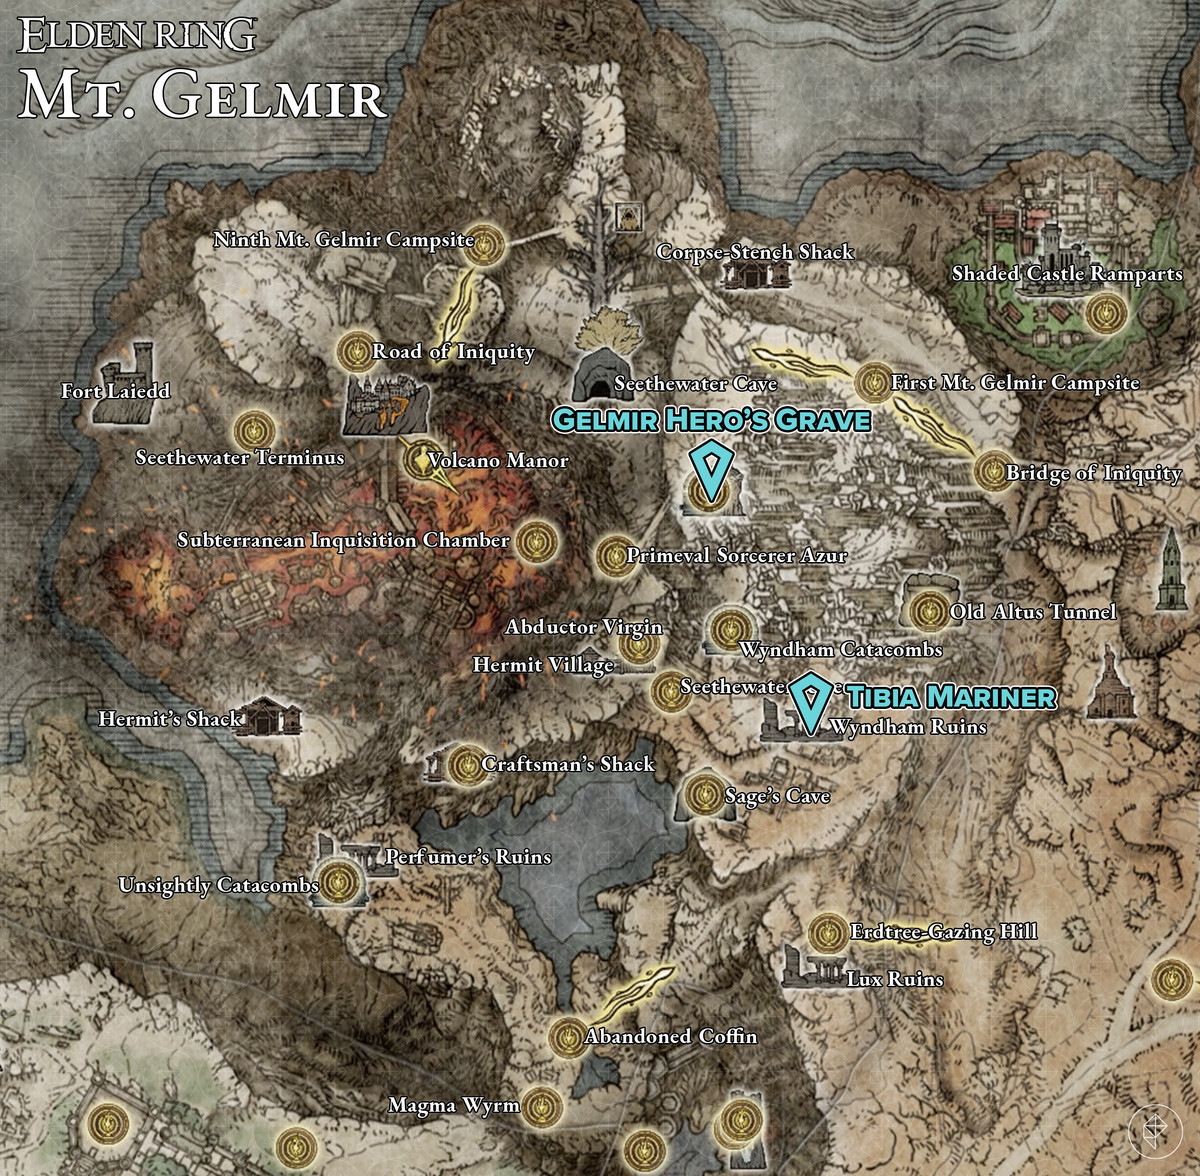 Elden Ring map of Mt. Gelmir with pins showing deathroot locations